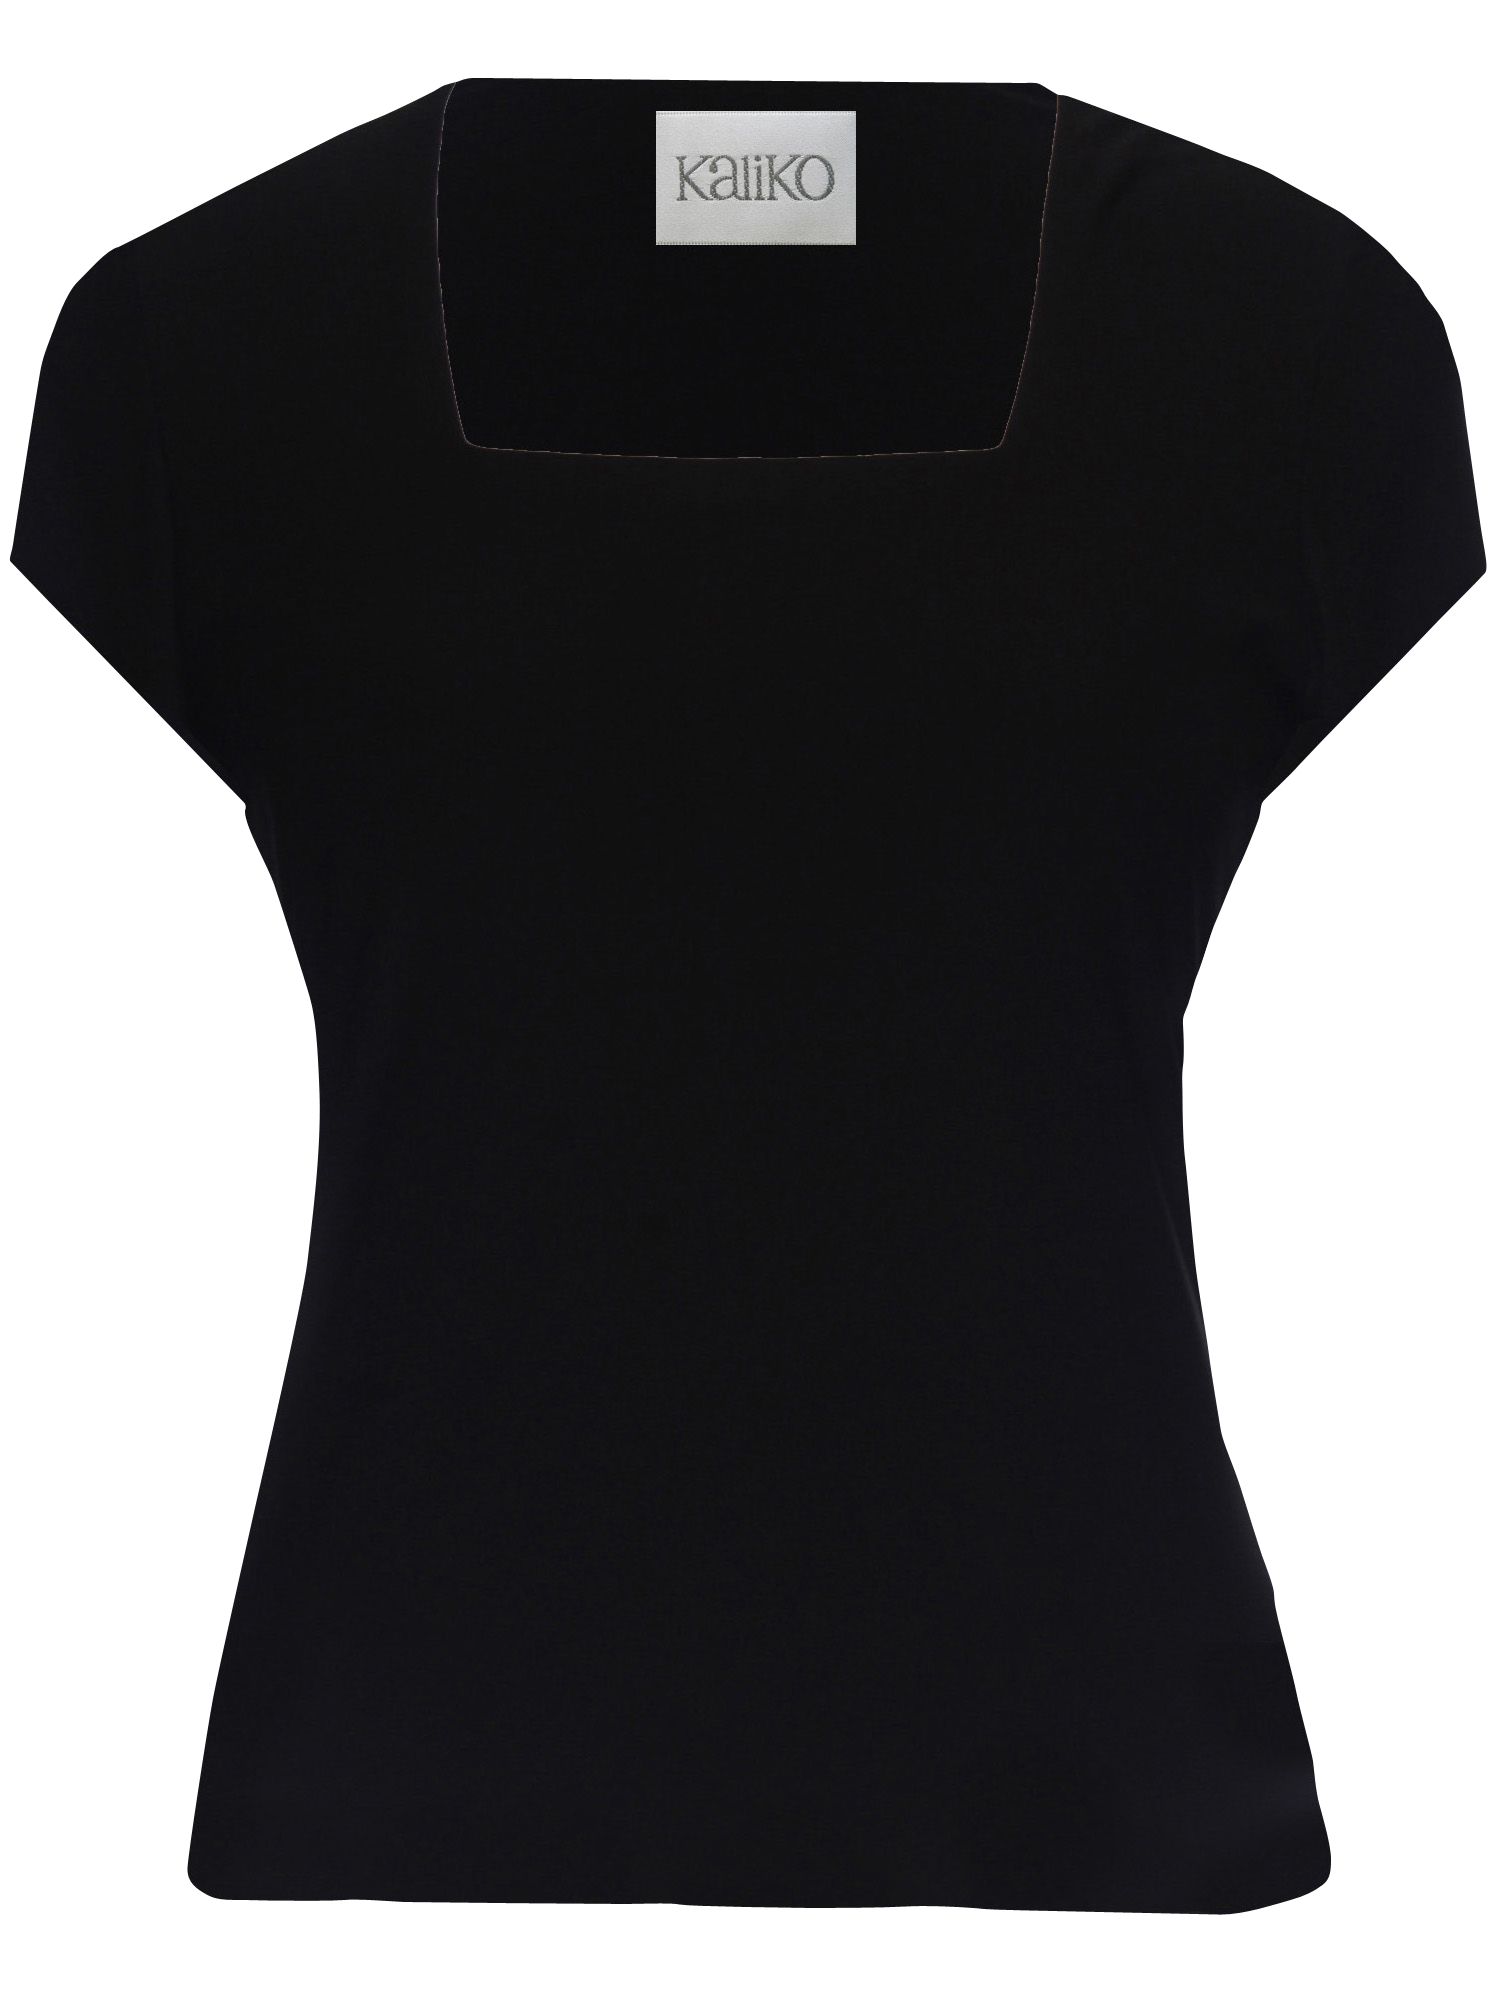 Short Sleeve Square Neck T-Shirt, Black